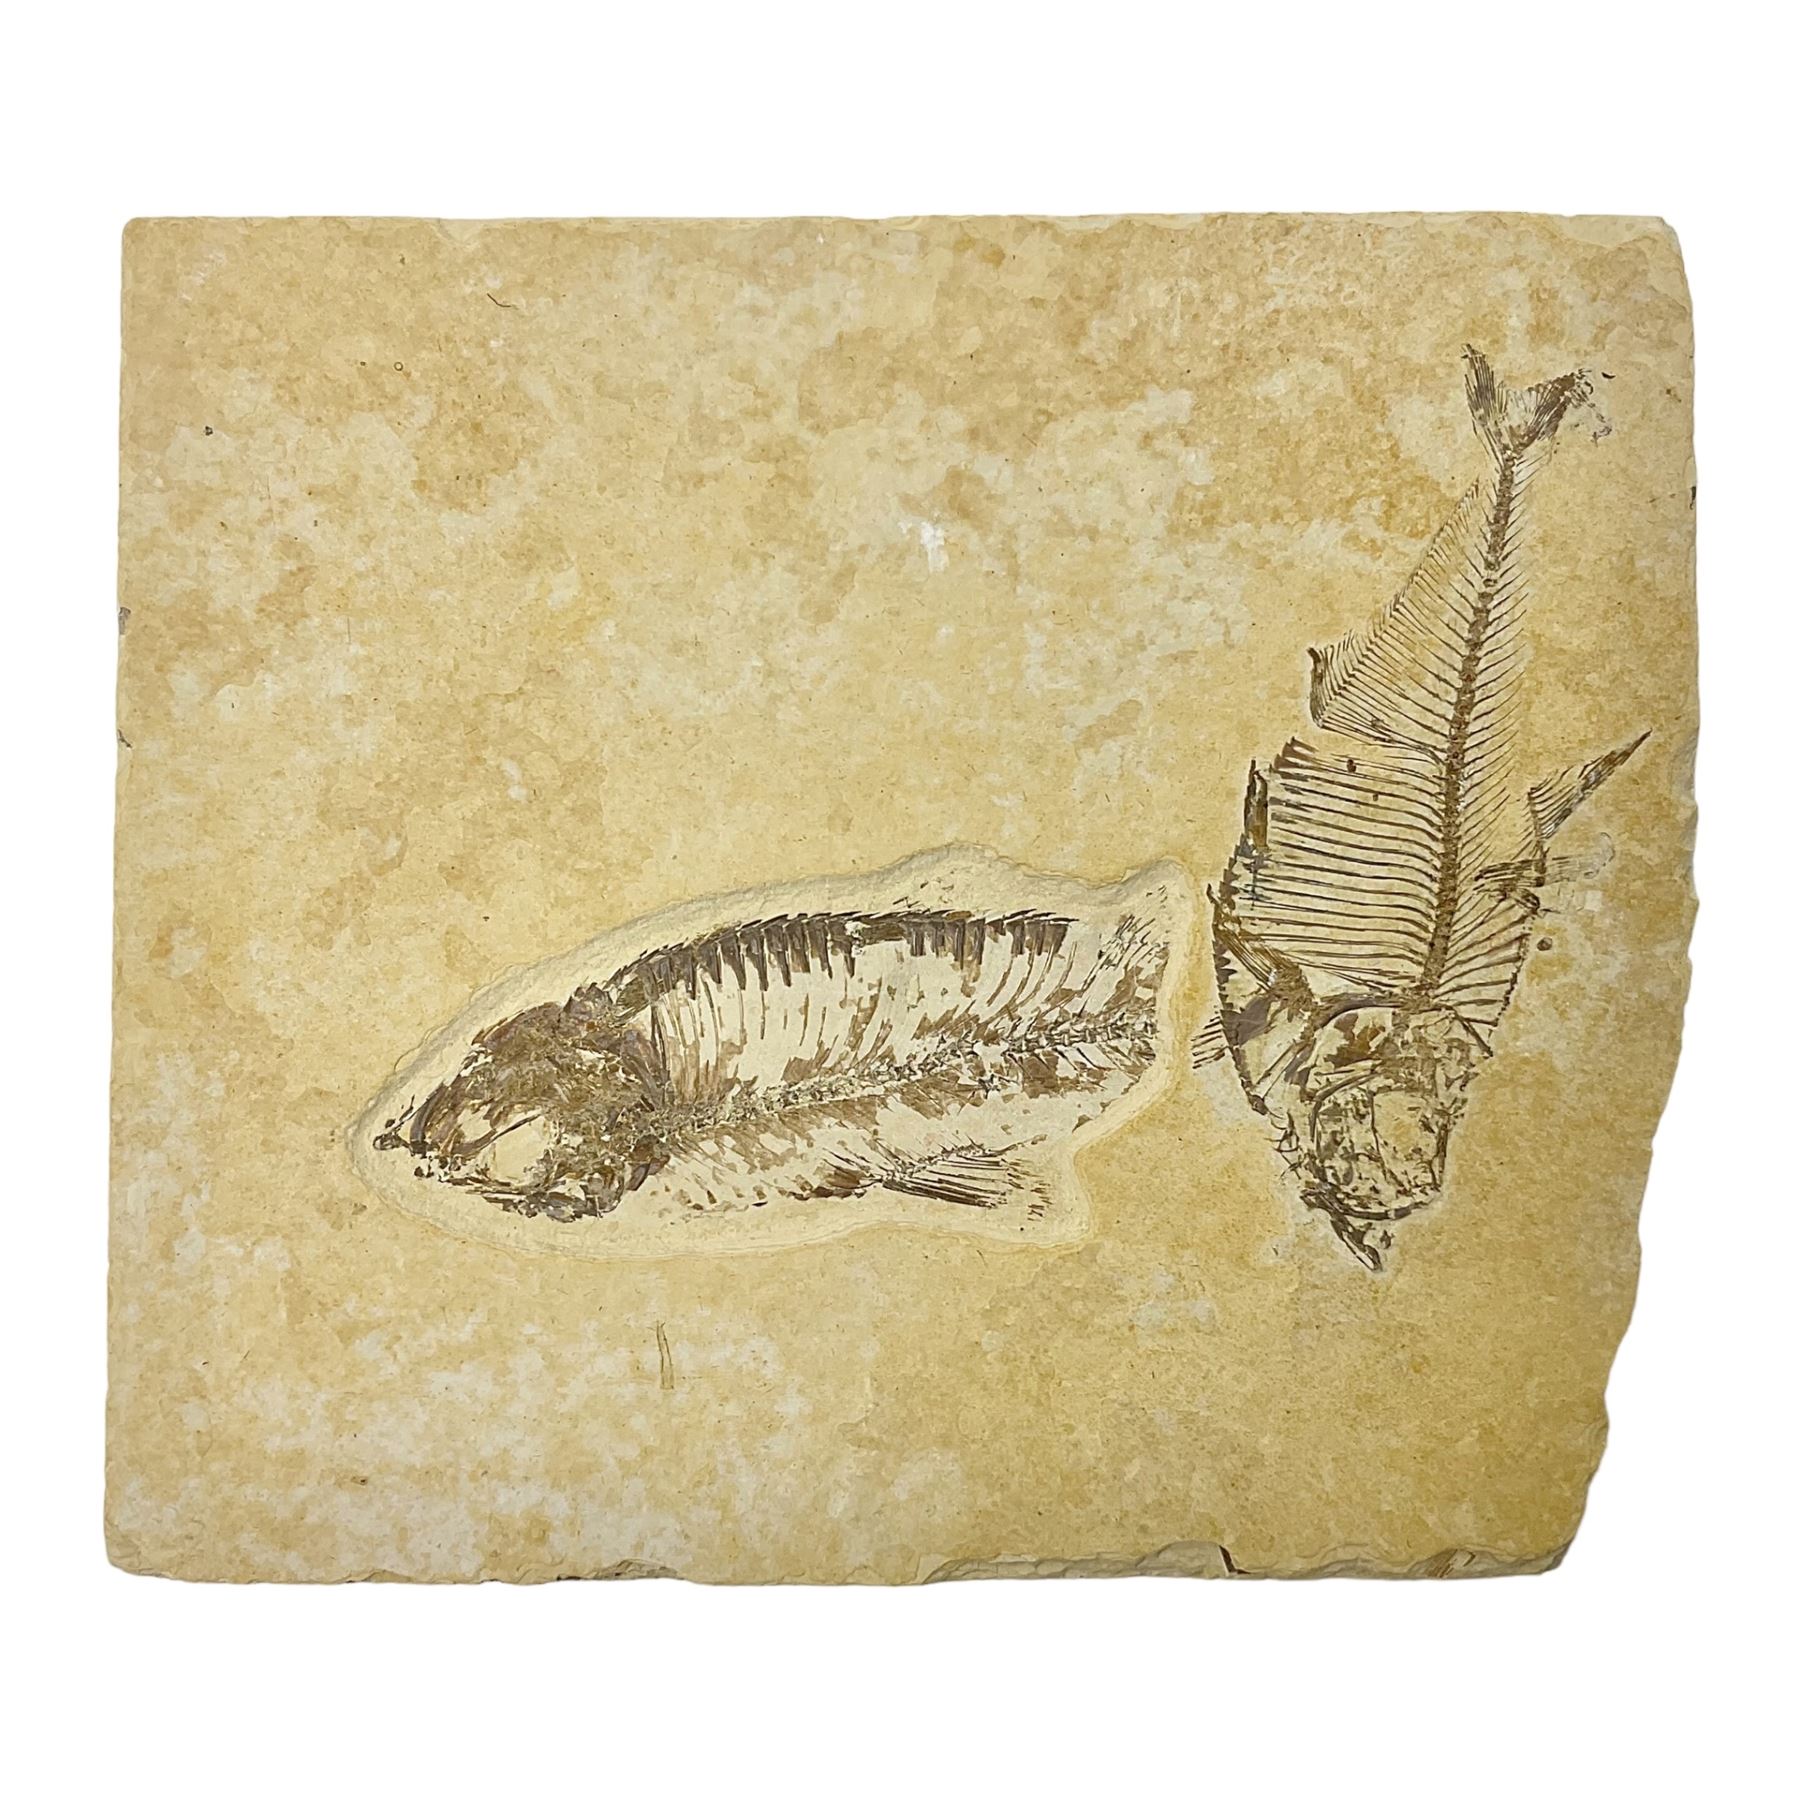 Two fossilised fish (Knightia alta) in a single matrix, age